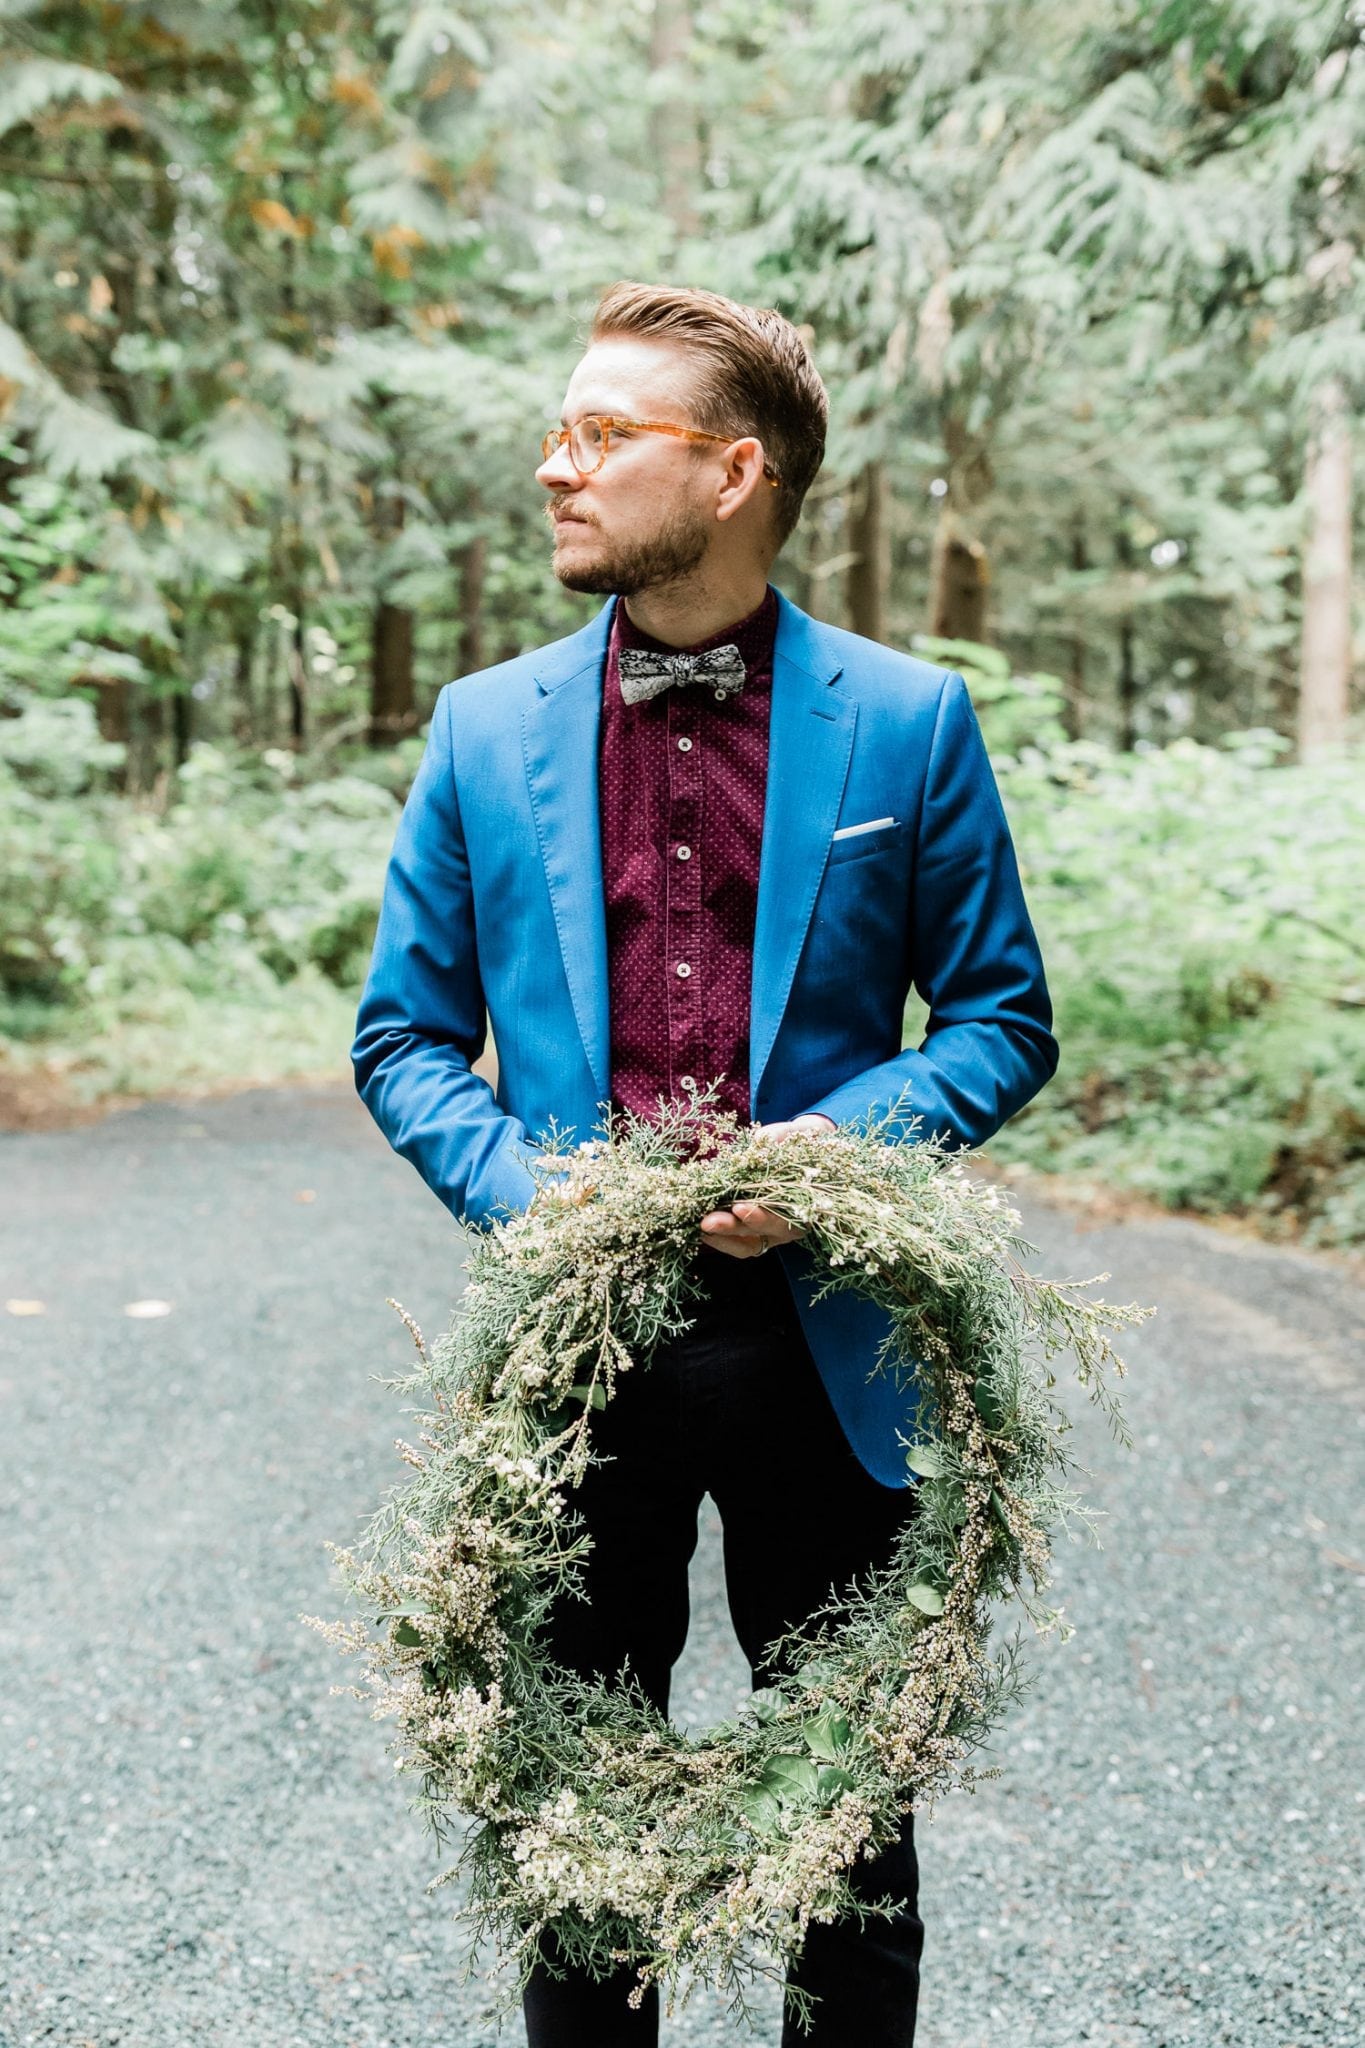 Wedding guest holding wreath | Vancouver wedding photographer